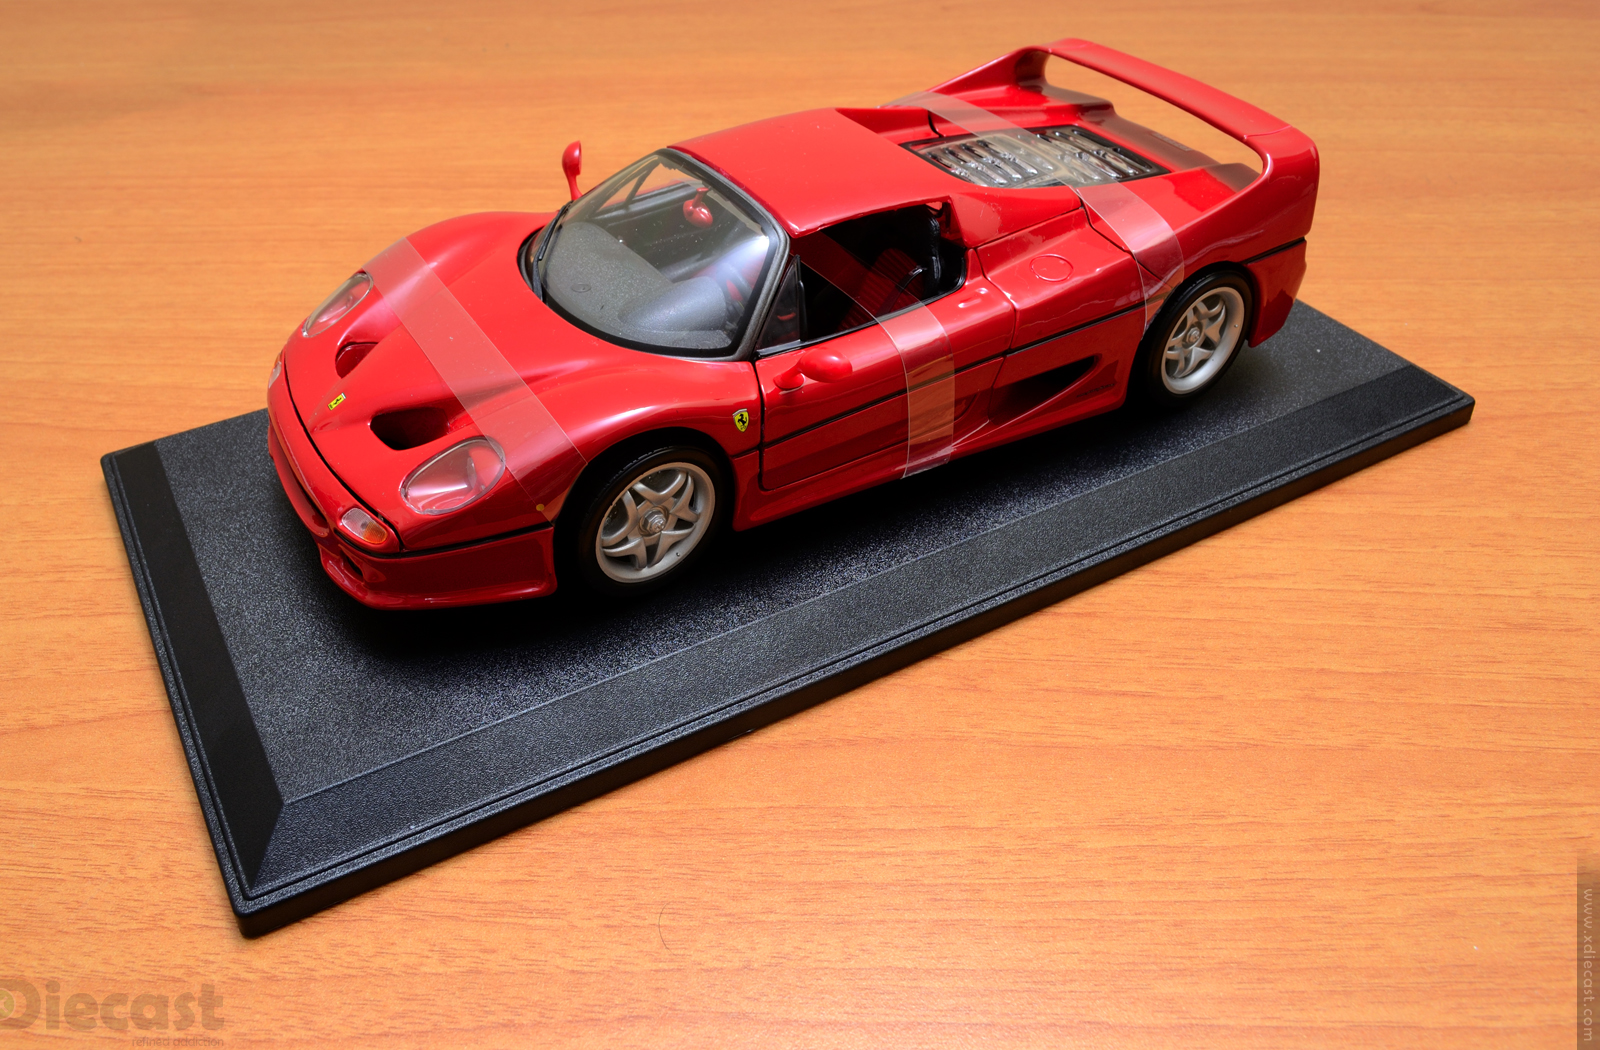 Tomica Presents Bburago Race & Play 3inch Die-cast Mini Car Ferrari F50 Red MISB for sale online